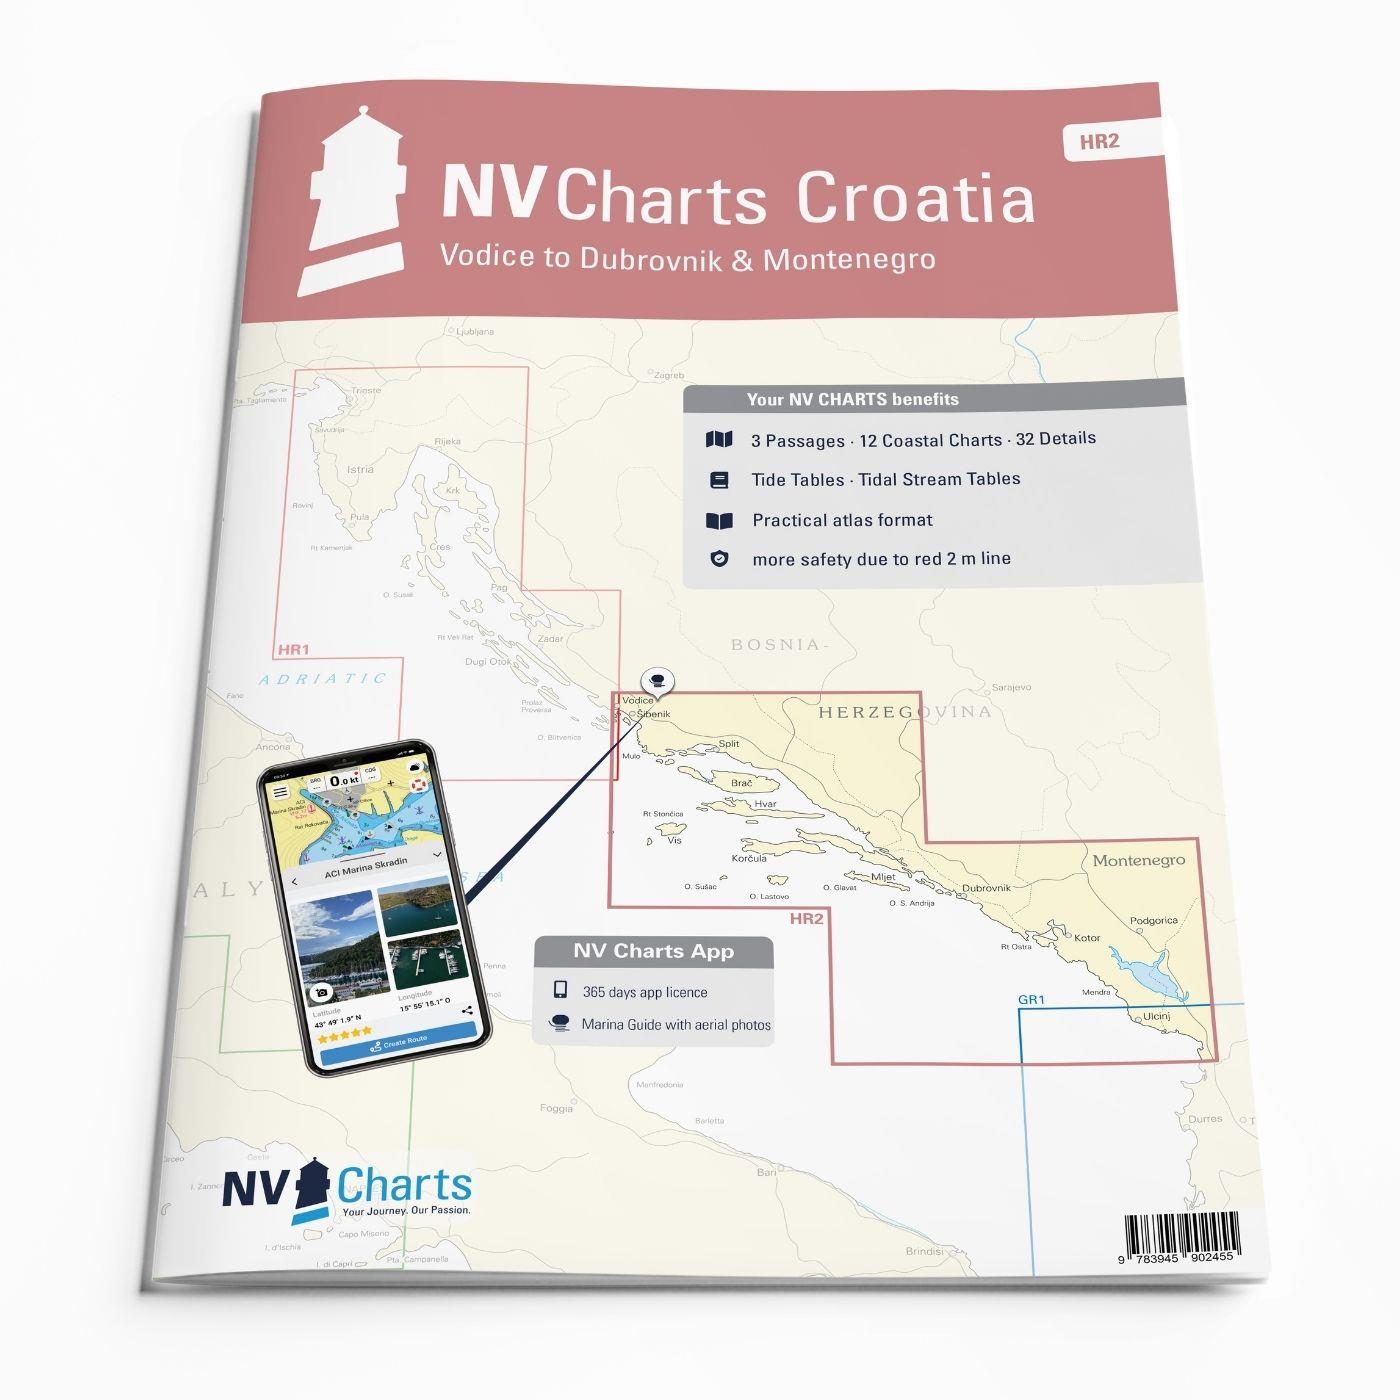 NV Atlas Croatia HR2 - Vodice to Dubrovnik & Montenegro